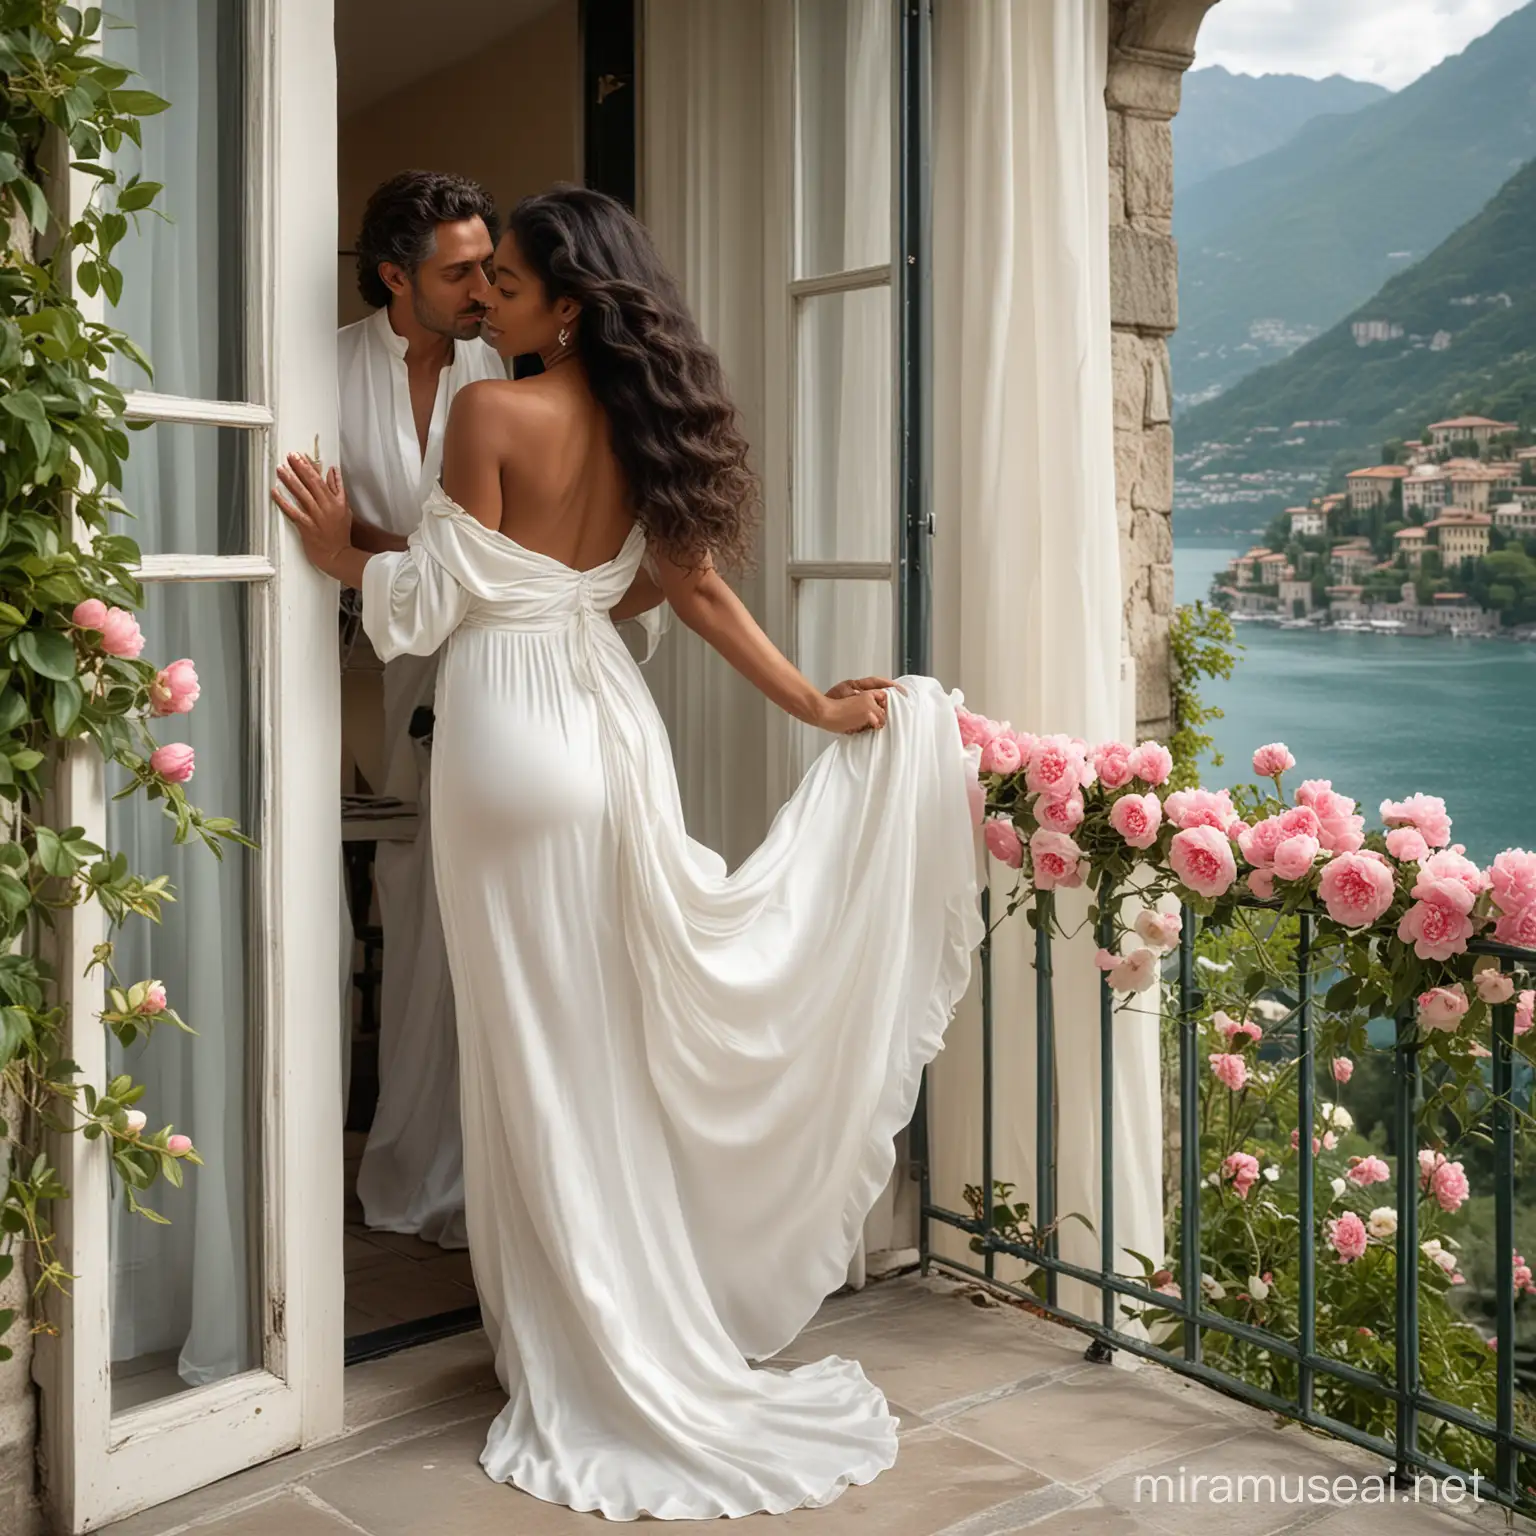 Elegant Black Woman in White Silk Dress at Italian Villa Balcony with Peonies